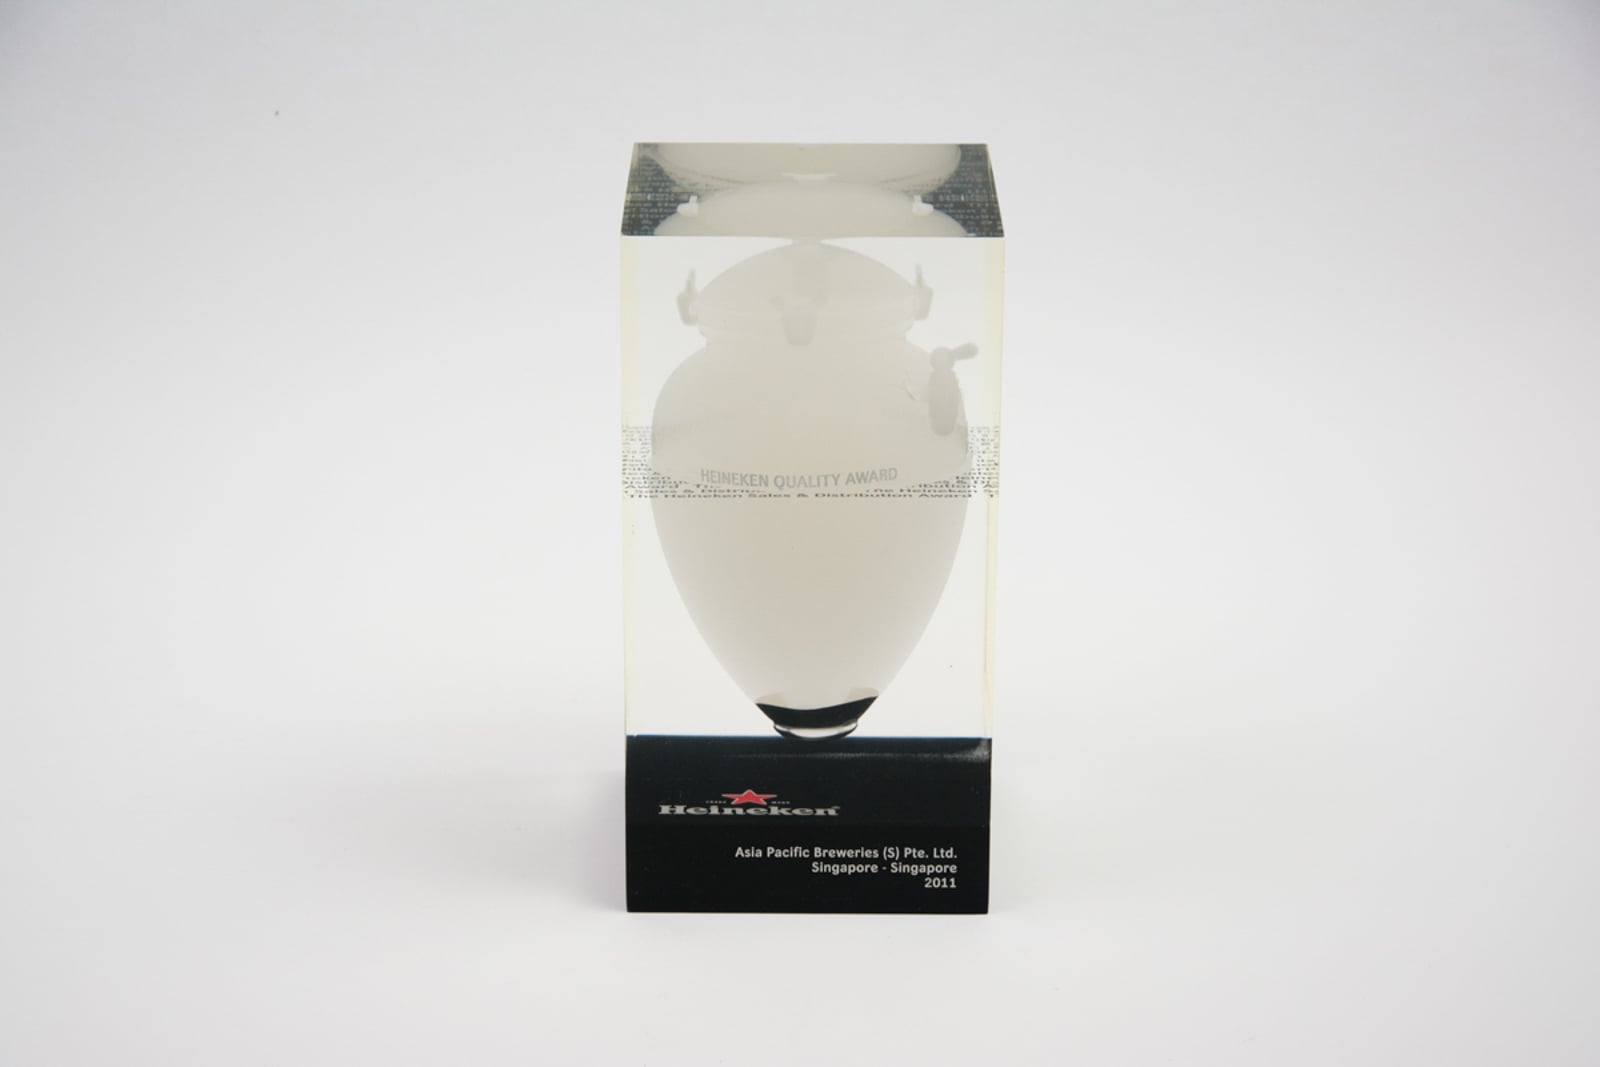 Heineken Quality Award Trophy 2011